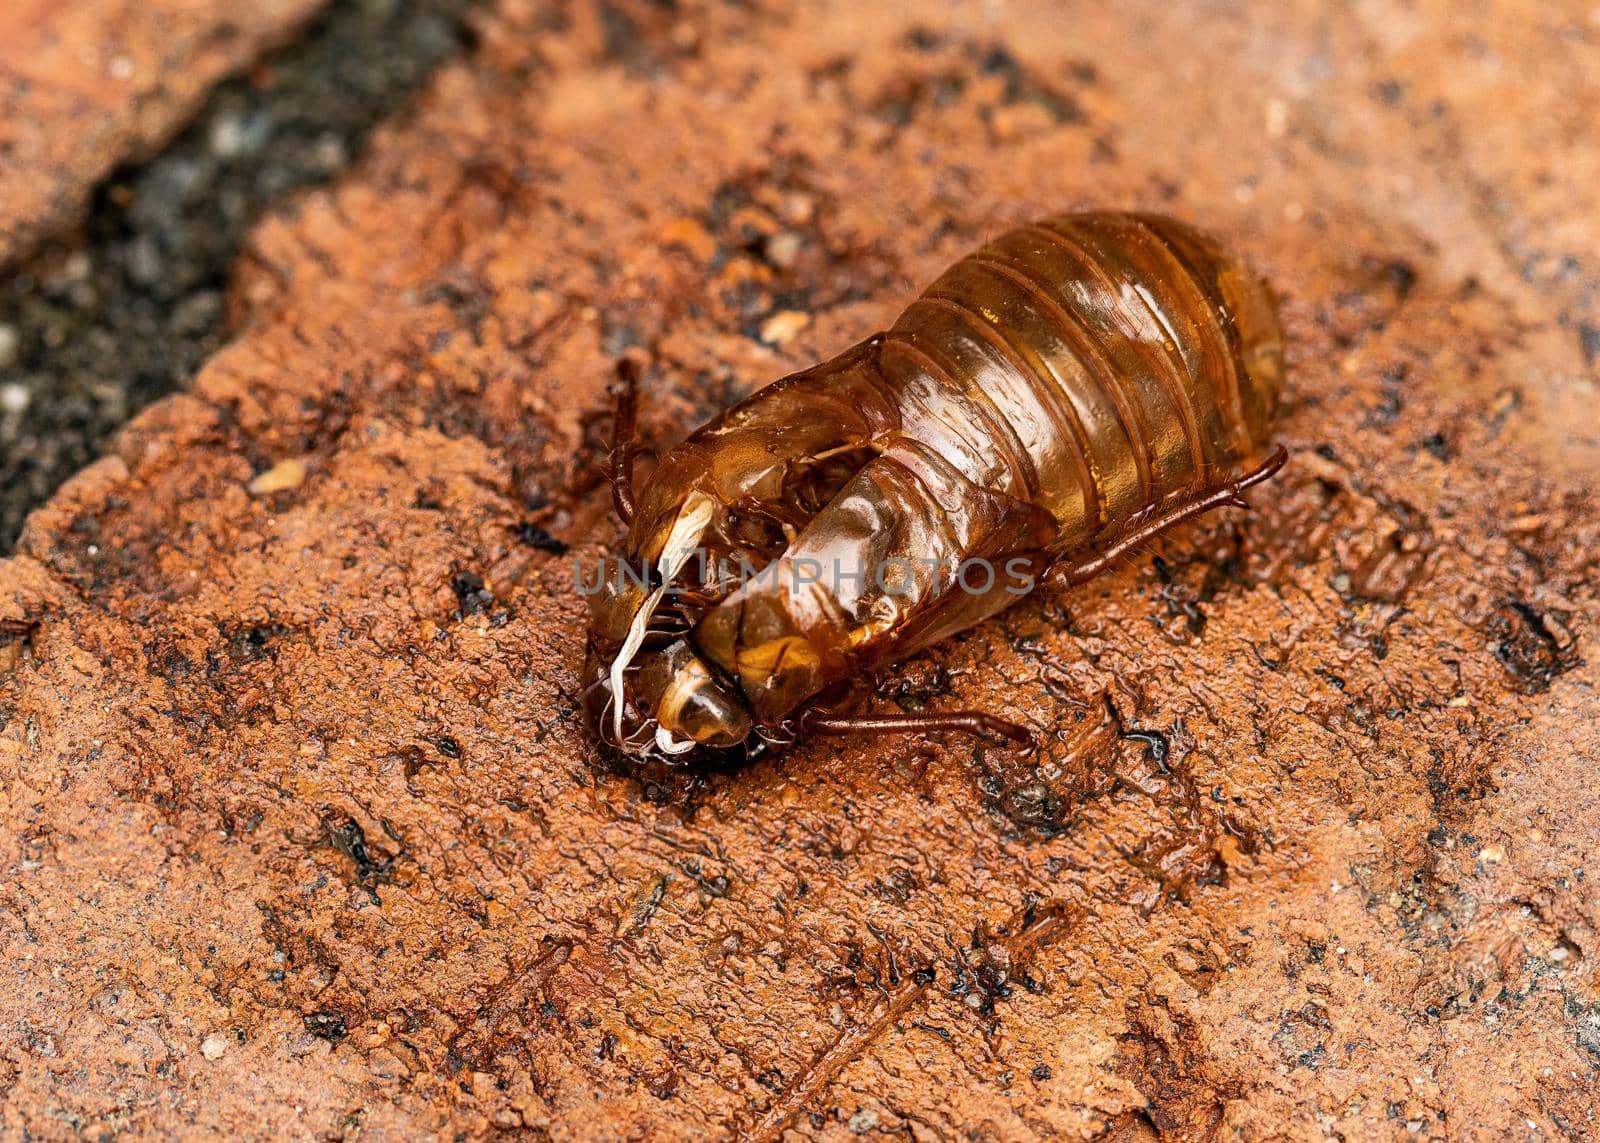 Empty exoskeleton left behind by emerging Brood X cicada.